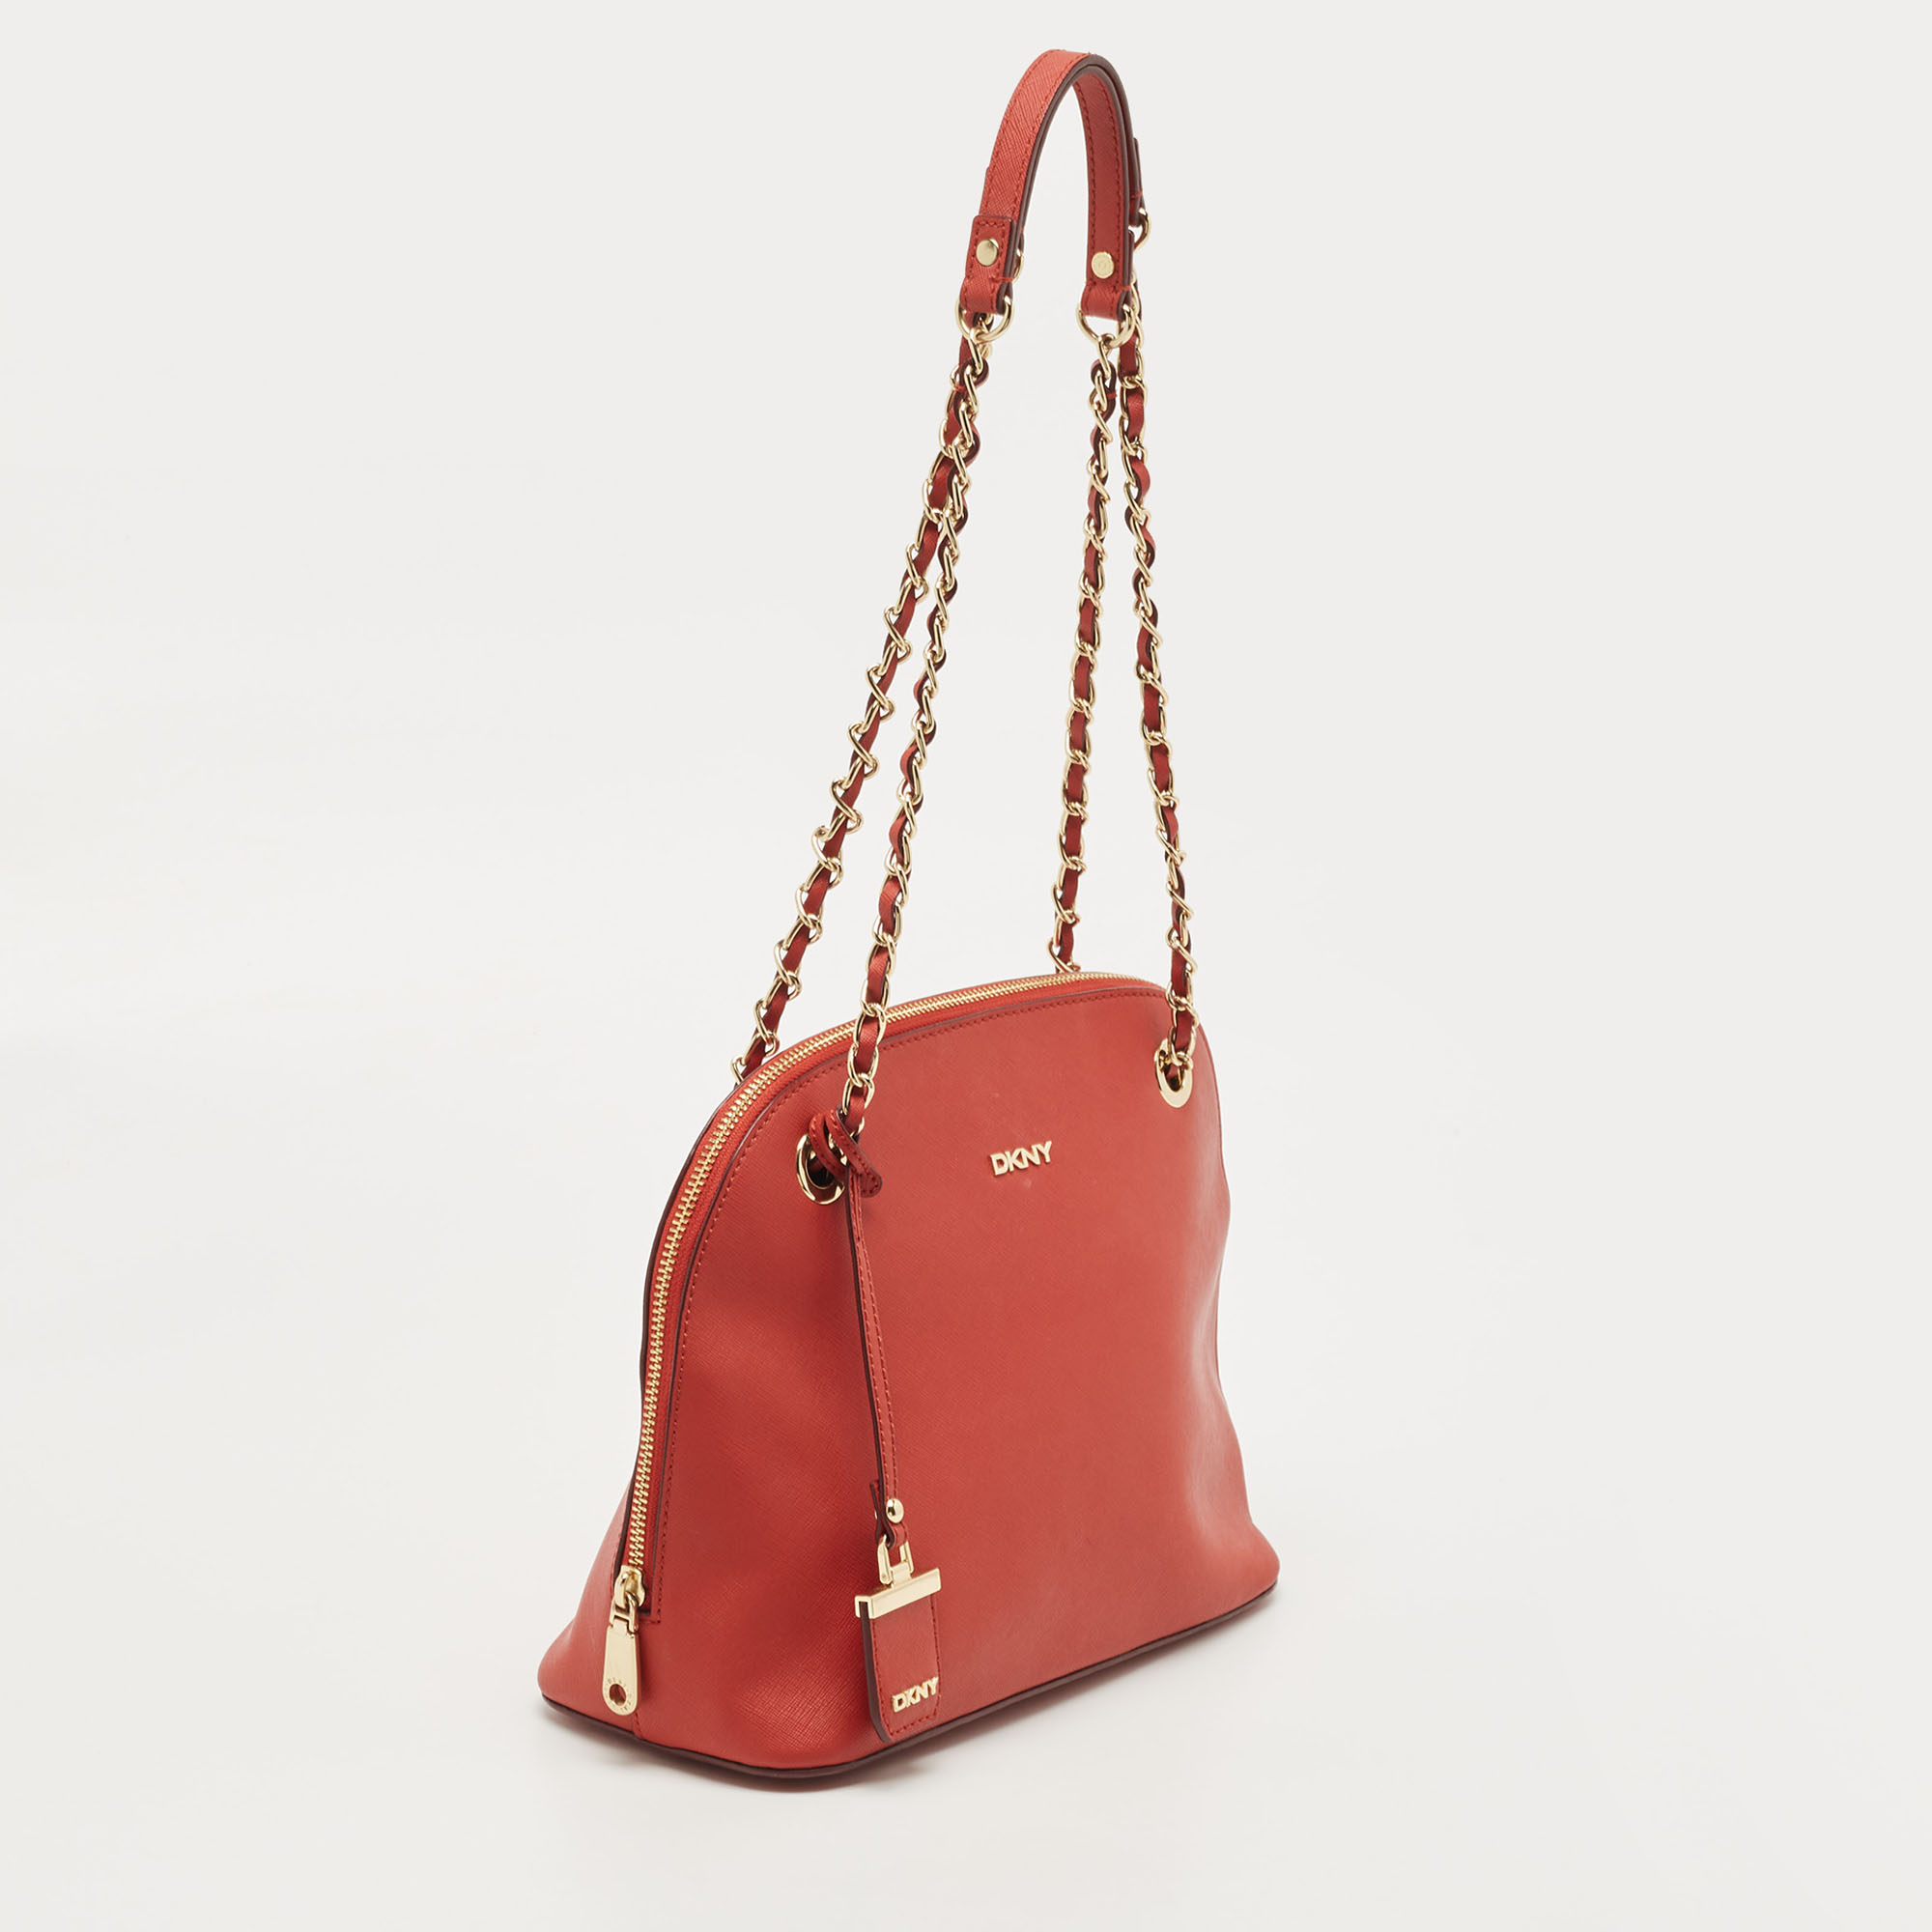 DKNY Red Leather Dome Shoulder Bag